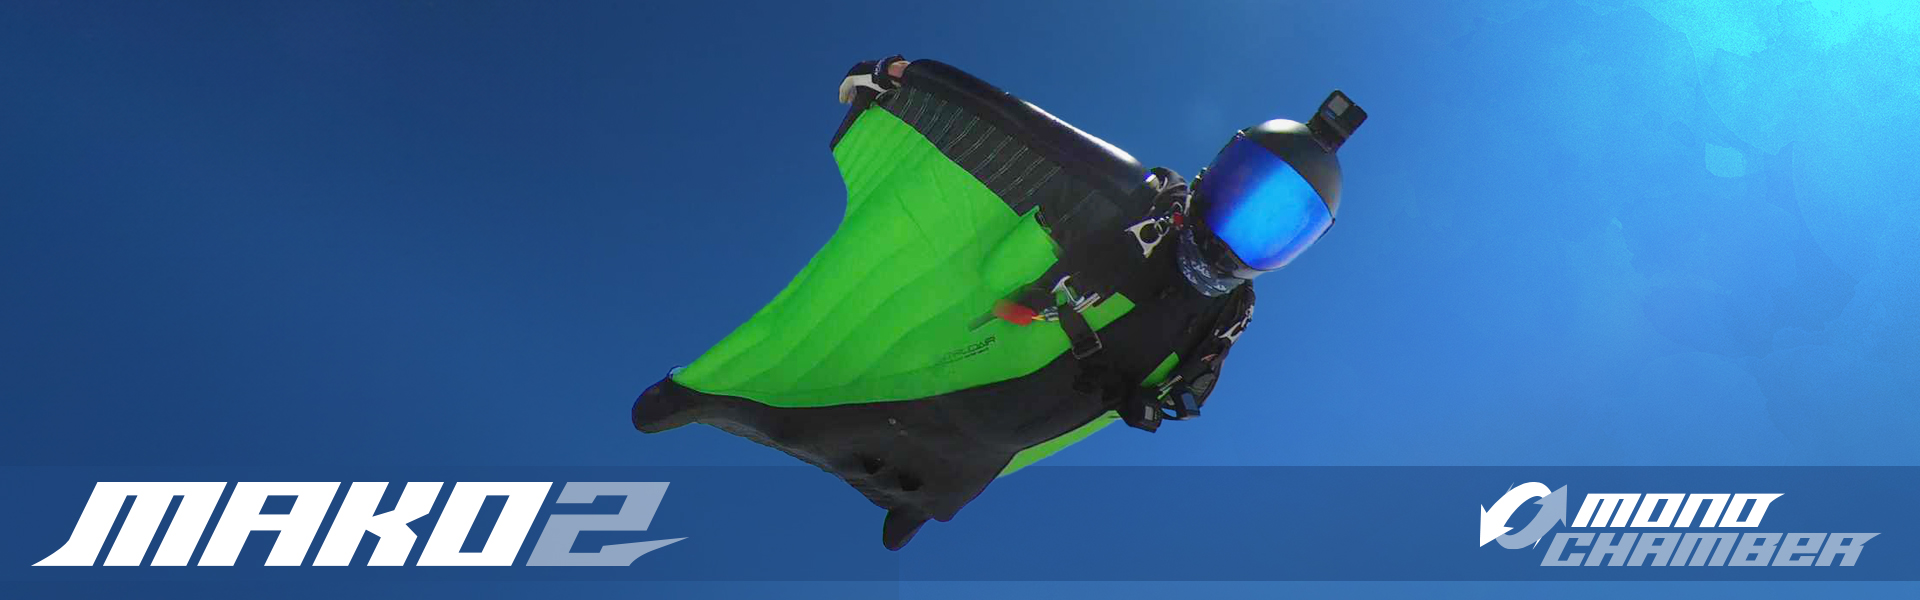 intrudair wingsuit